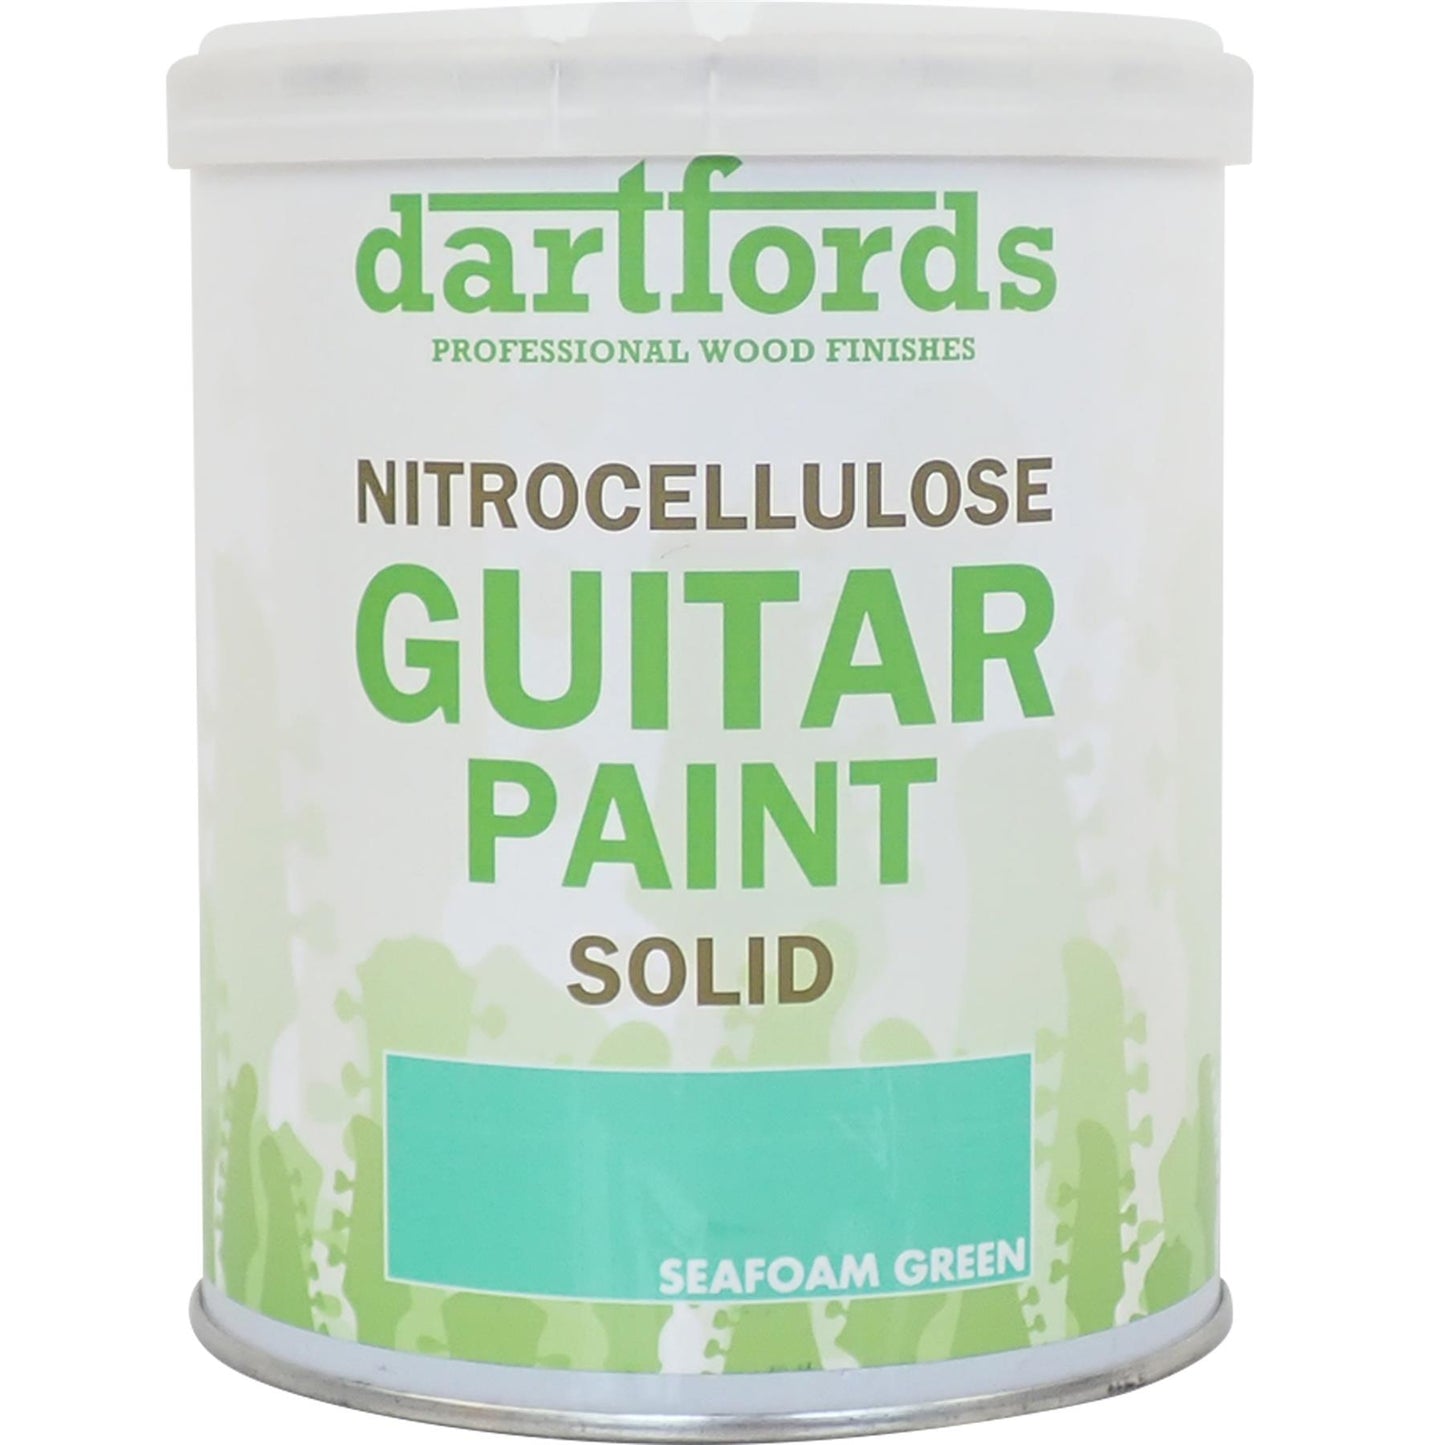 dartfords Seafoam Green Nitrocellulose Guitar Paint - 1 litre Tin